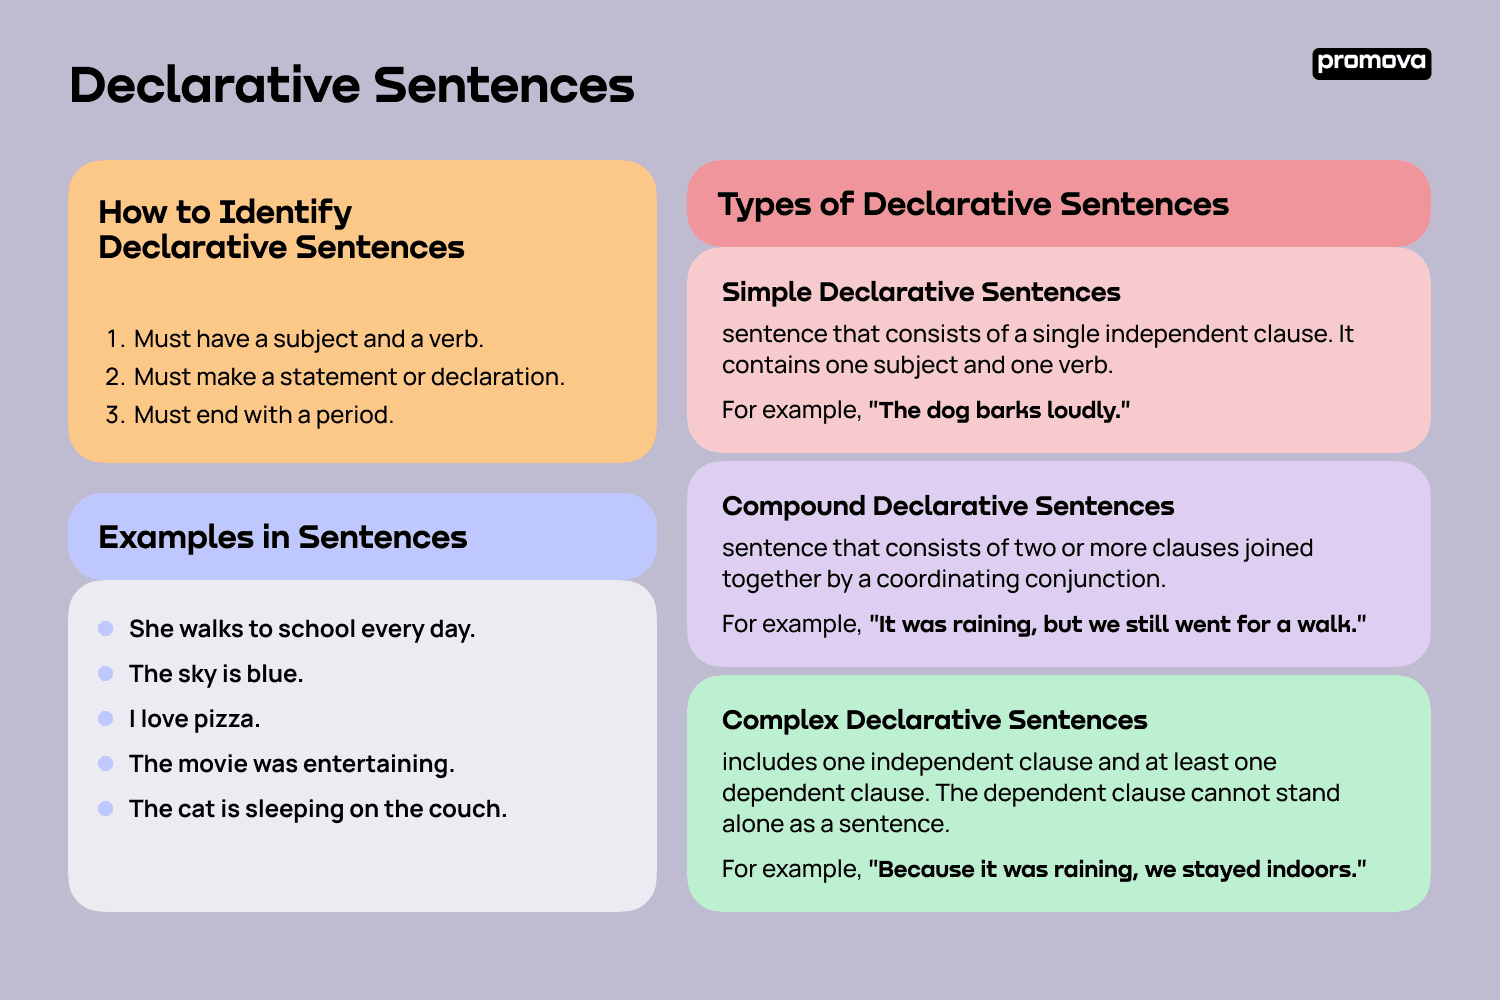 Declarative Sentences